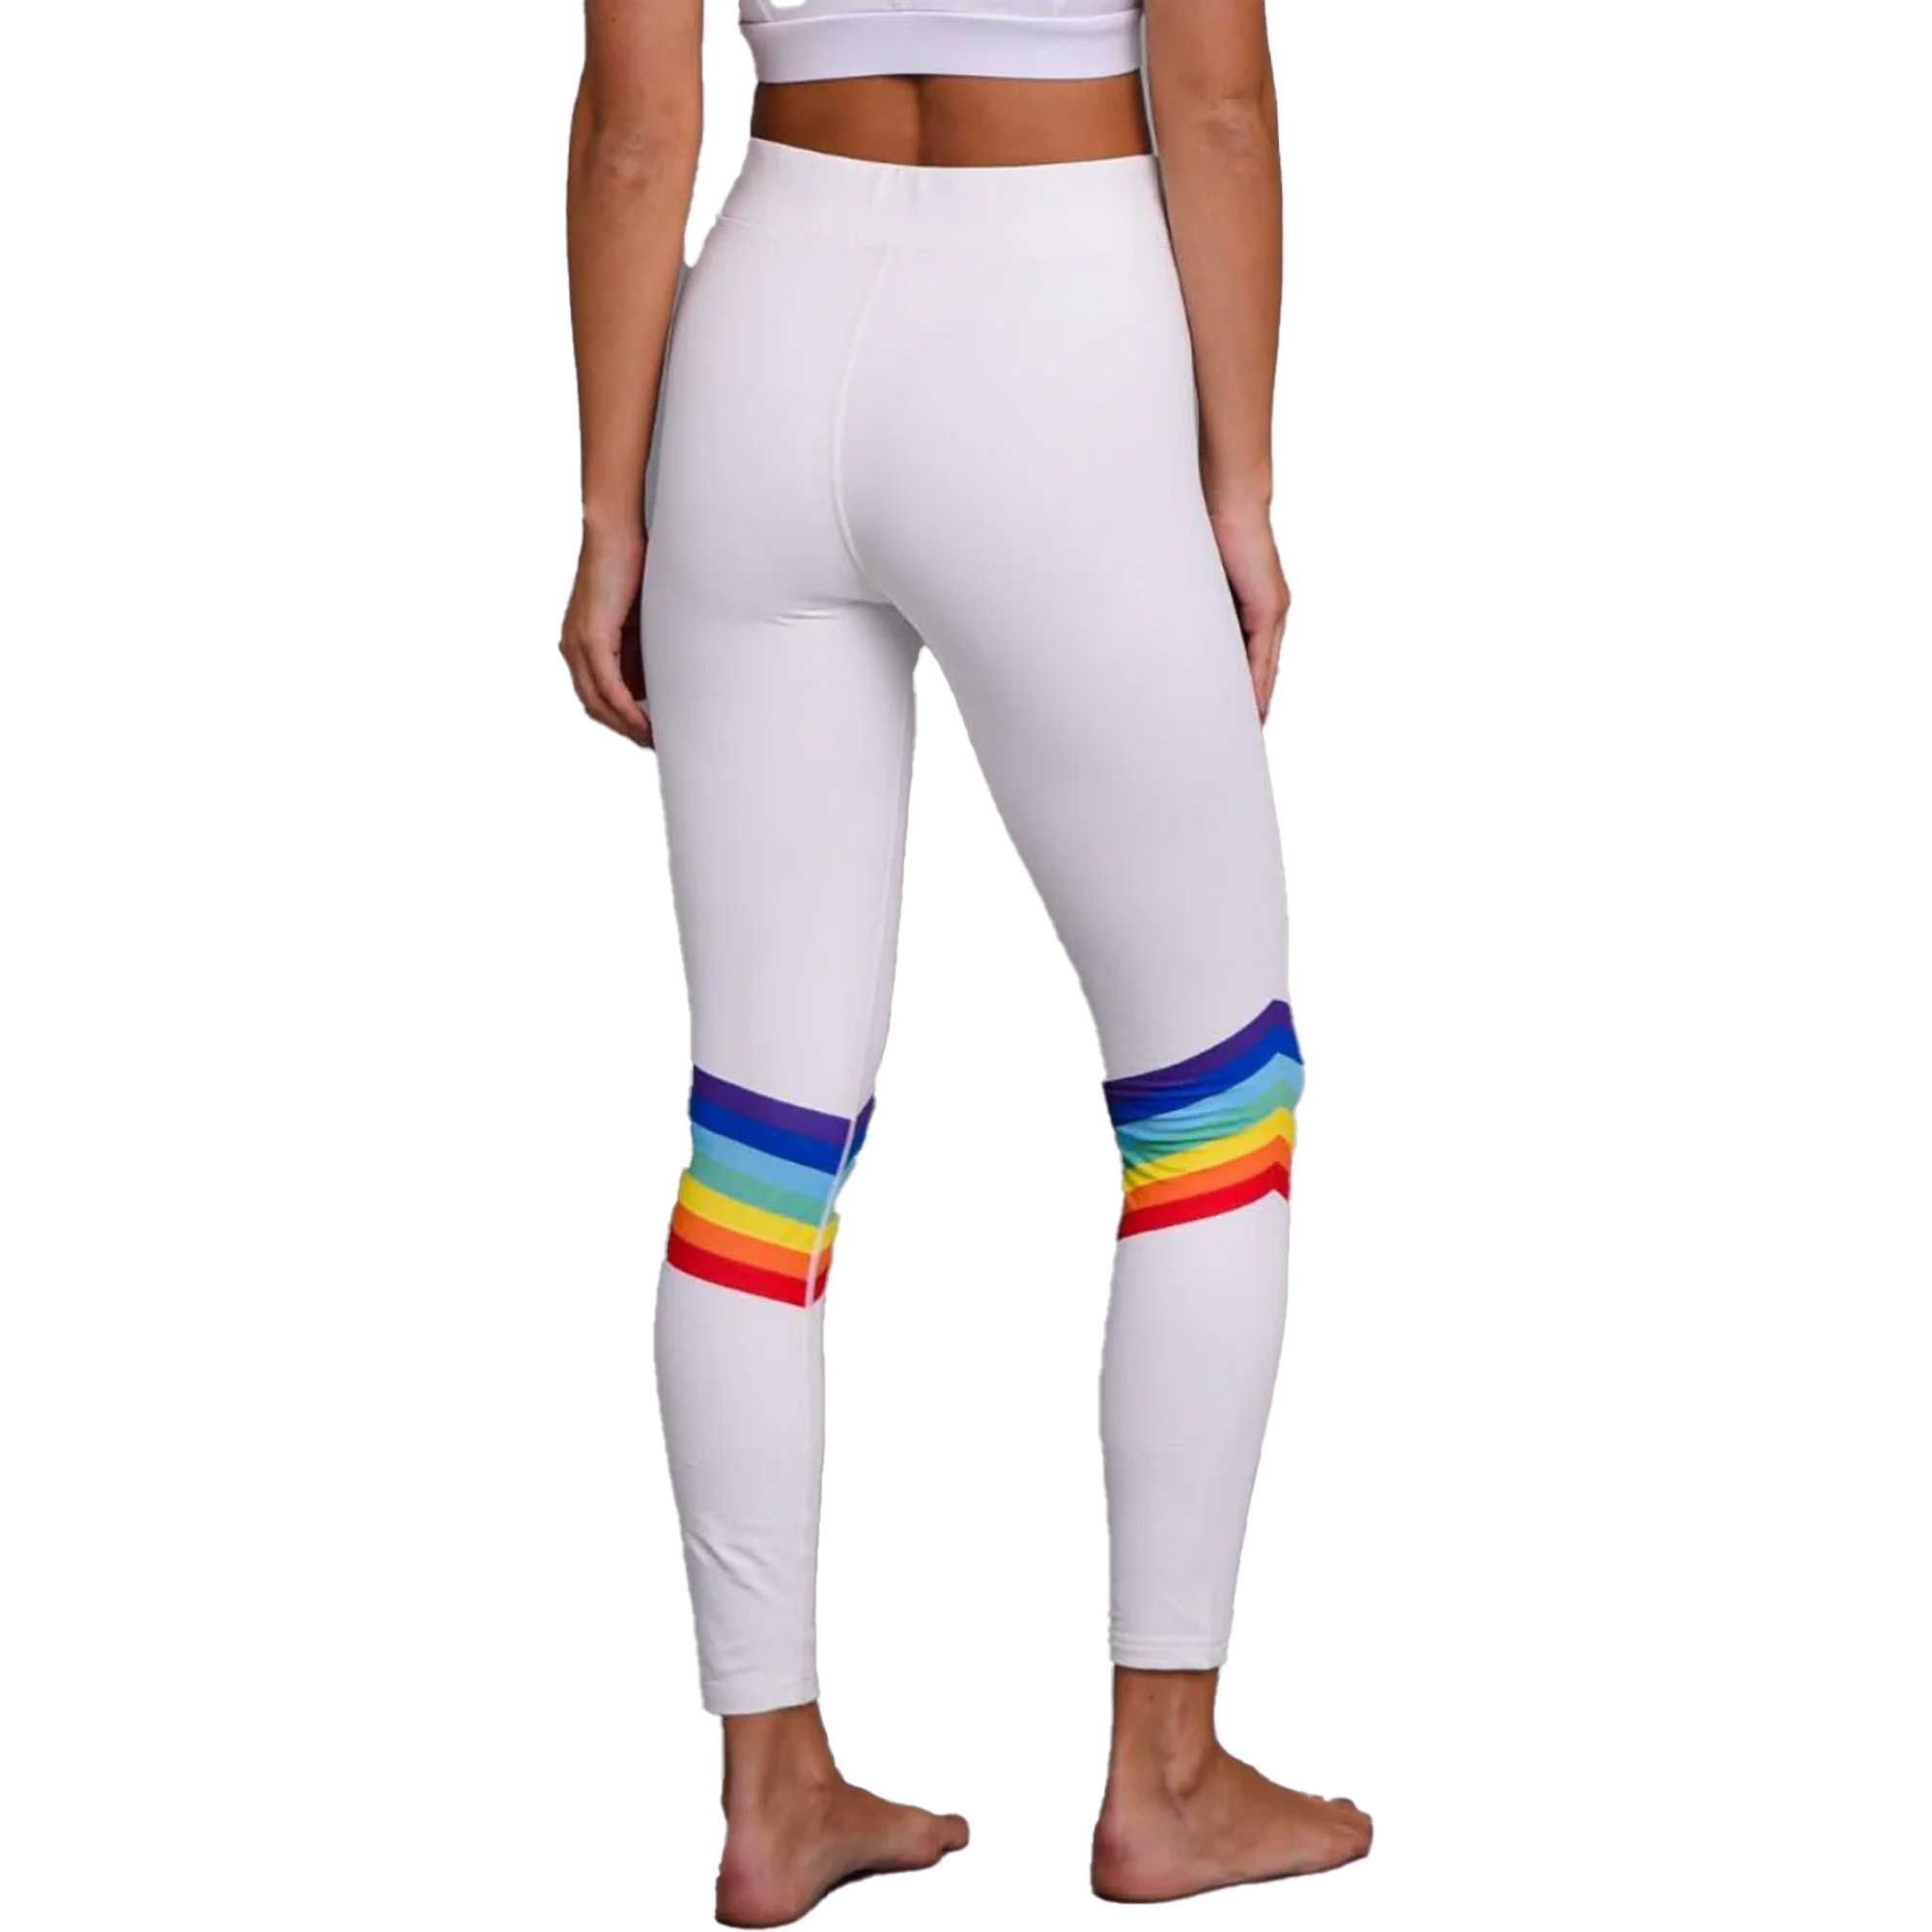 OOSC Rainbow Road Leggings Women's Base Layer Pants